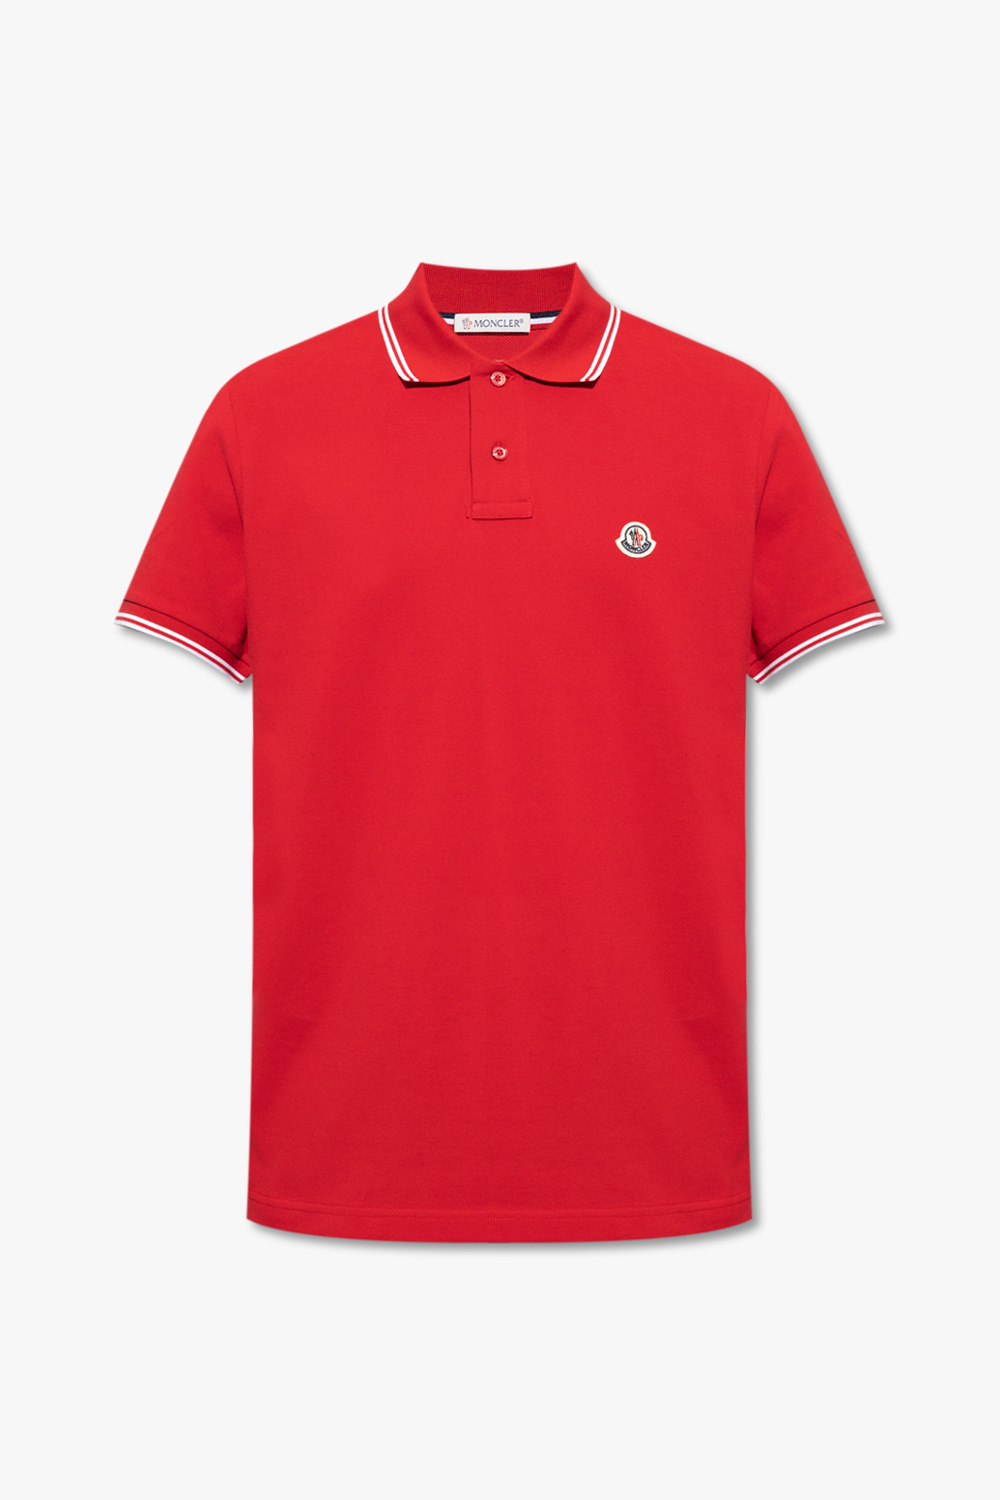 Moncler Kids polo shirt with logo